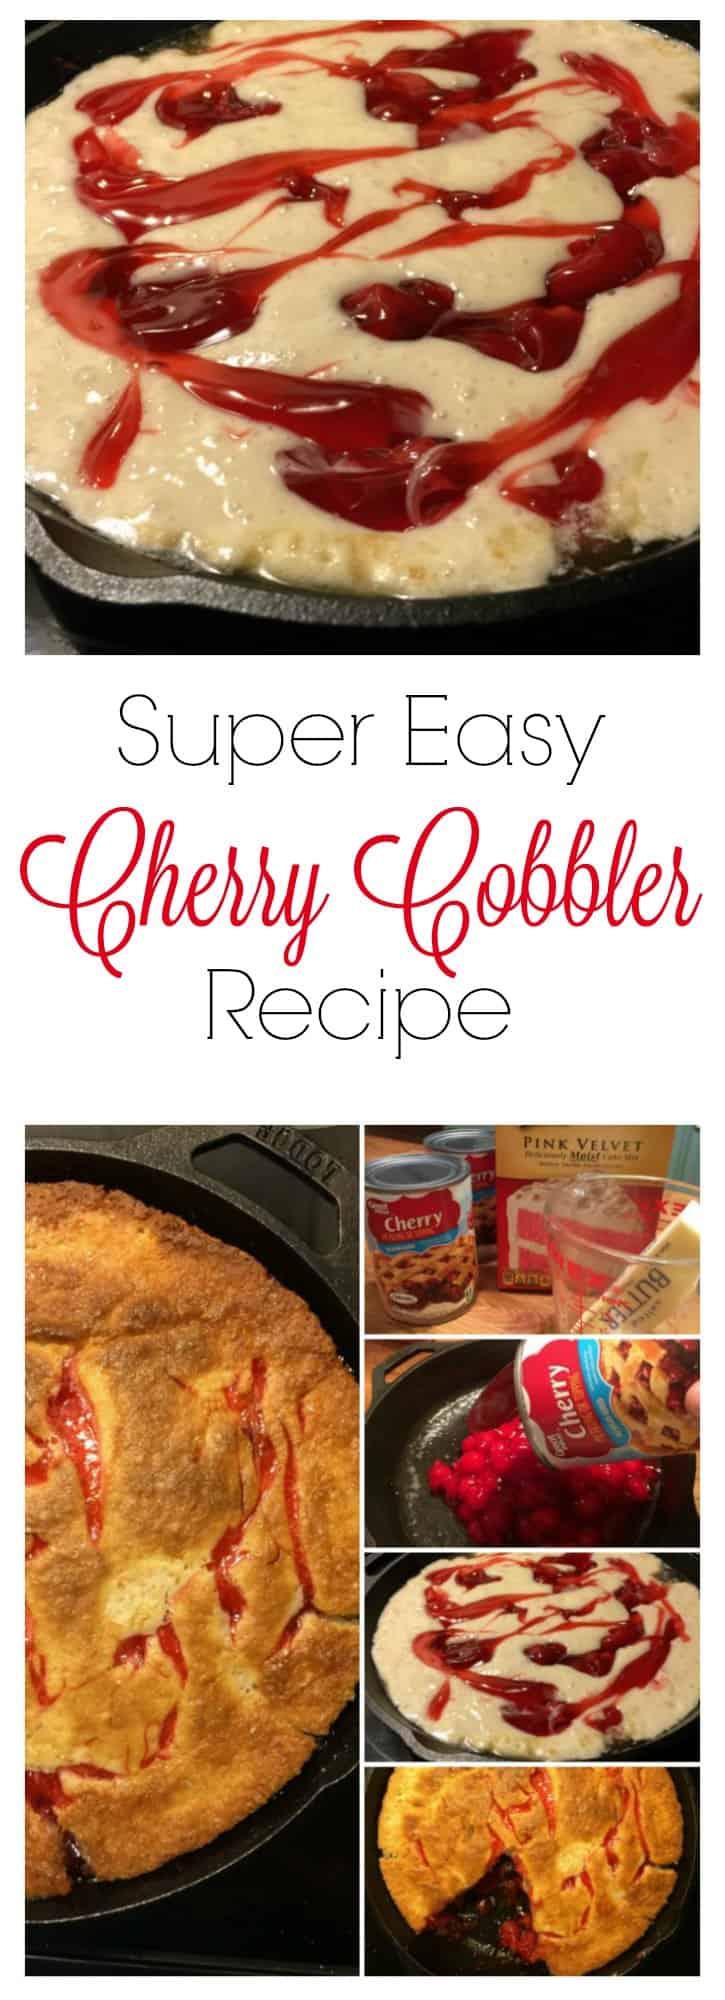 Super Easy Cherry Cobbler recipe 